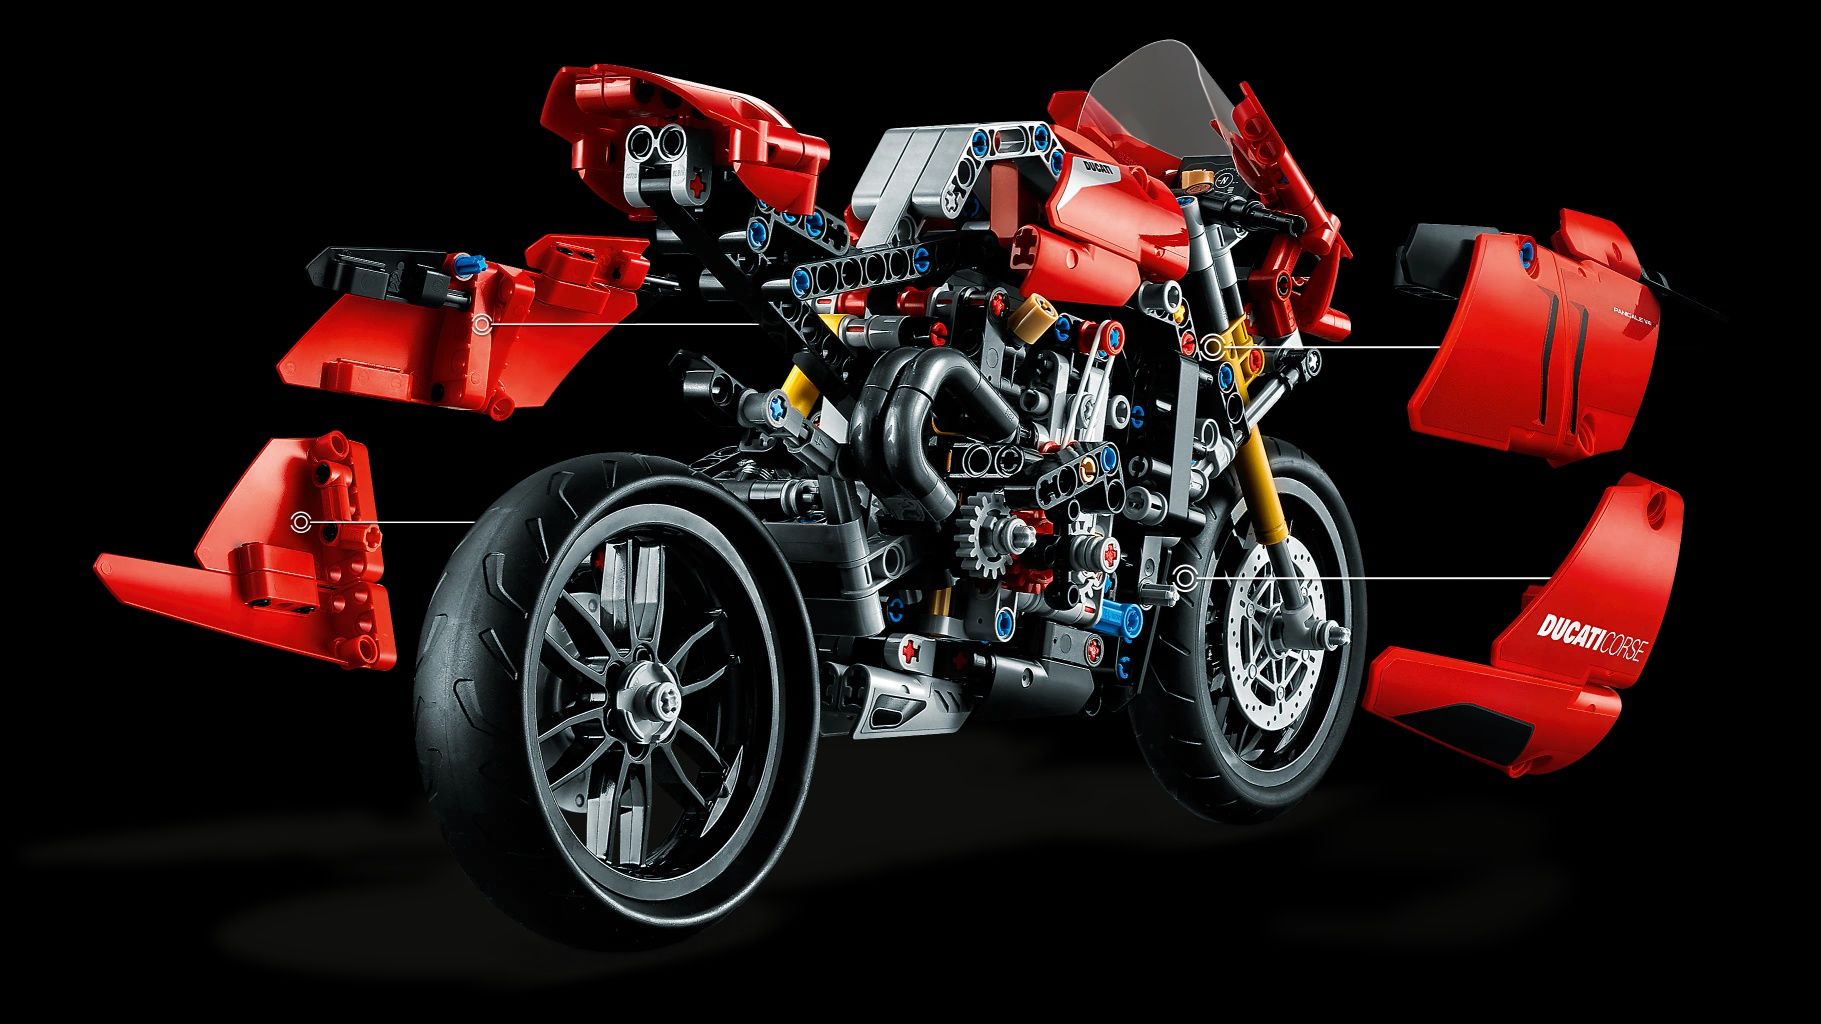 Продавам LEGO Technic 42107 - Ducati Panigale V4 R